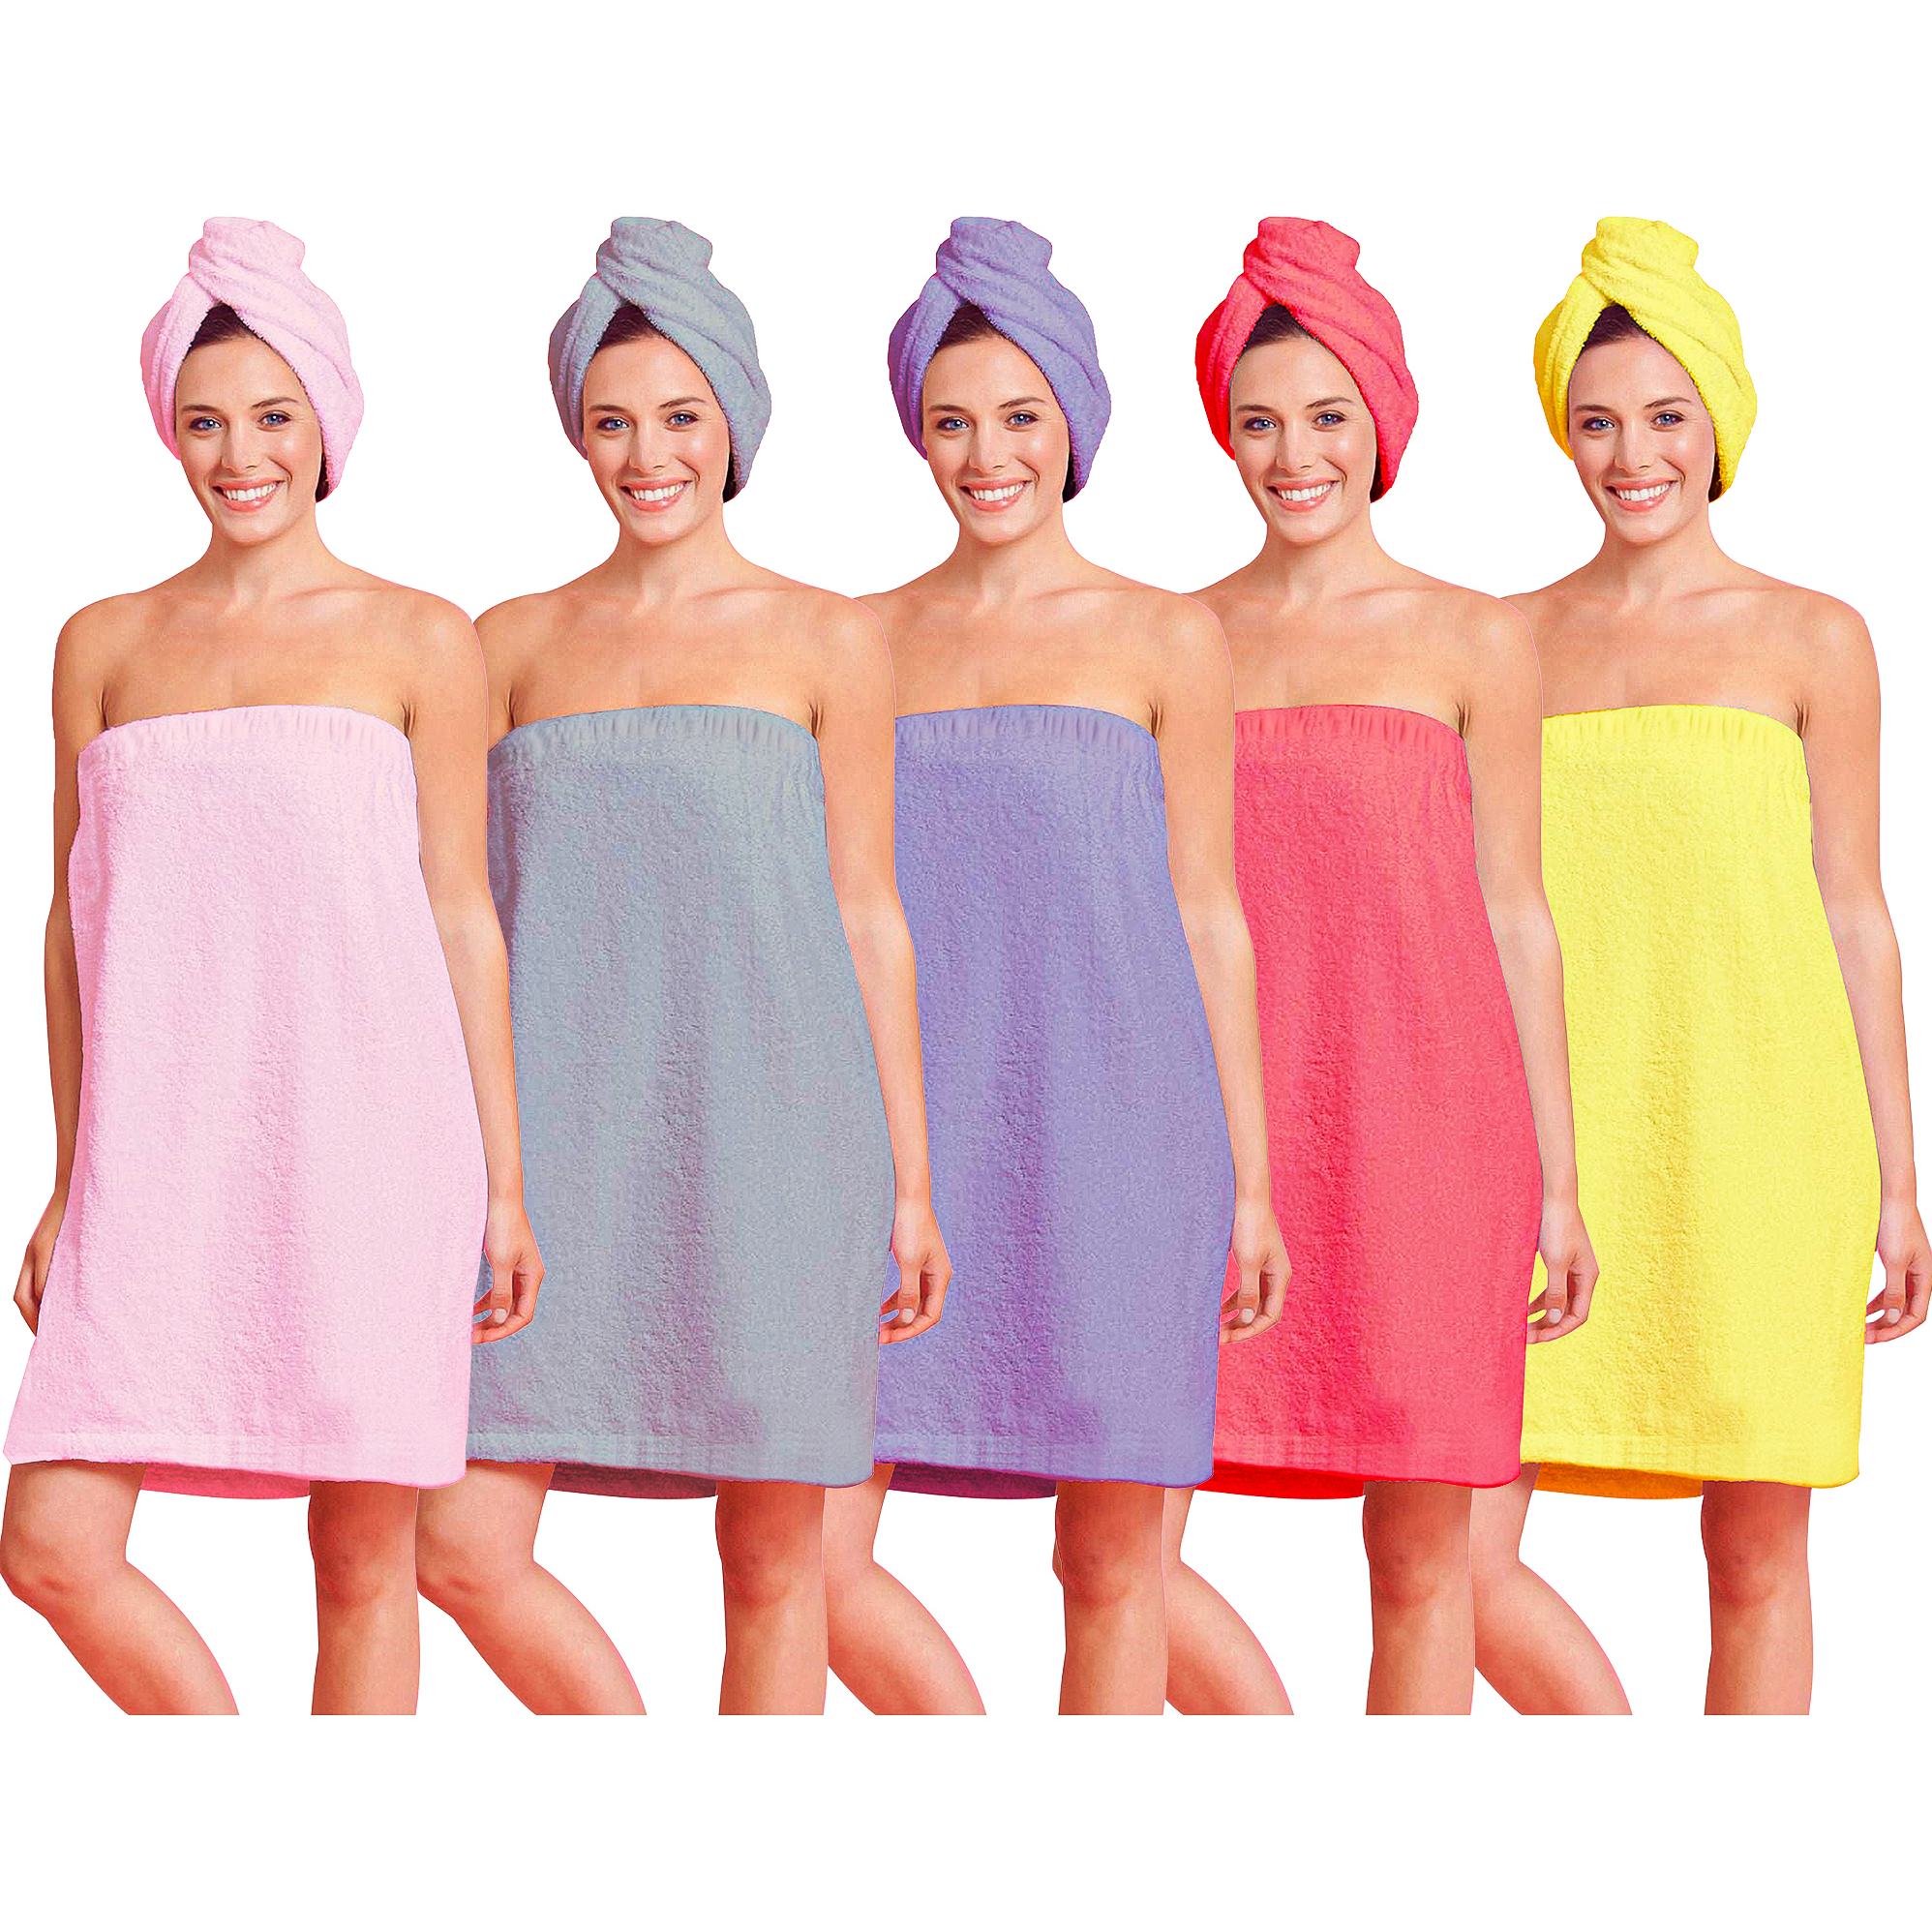 2-Piece Women's Spa Body Wrap & Hair Towel - Red